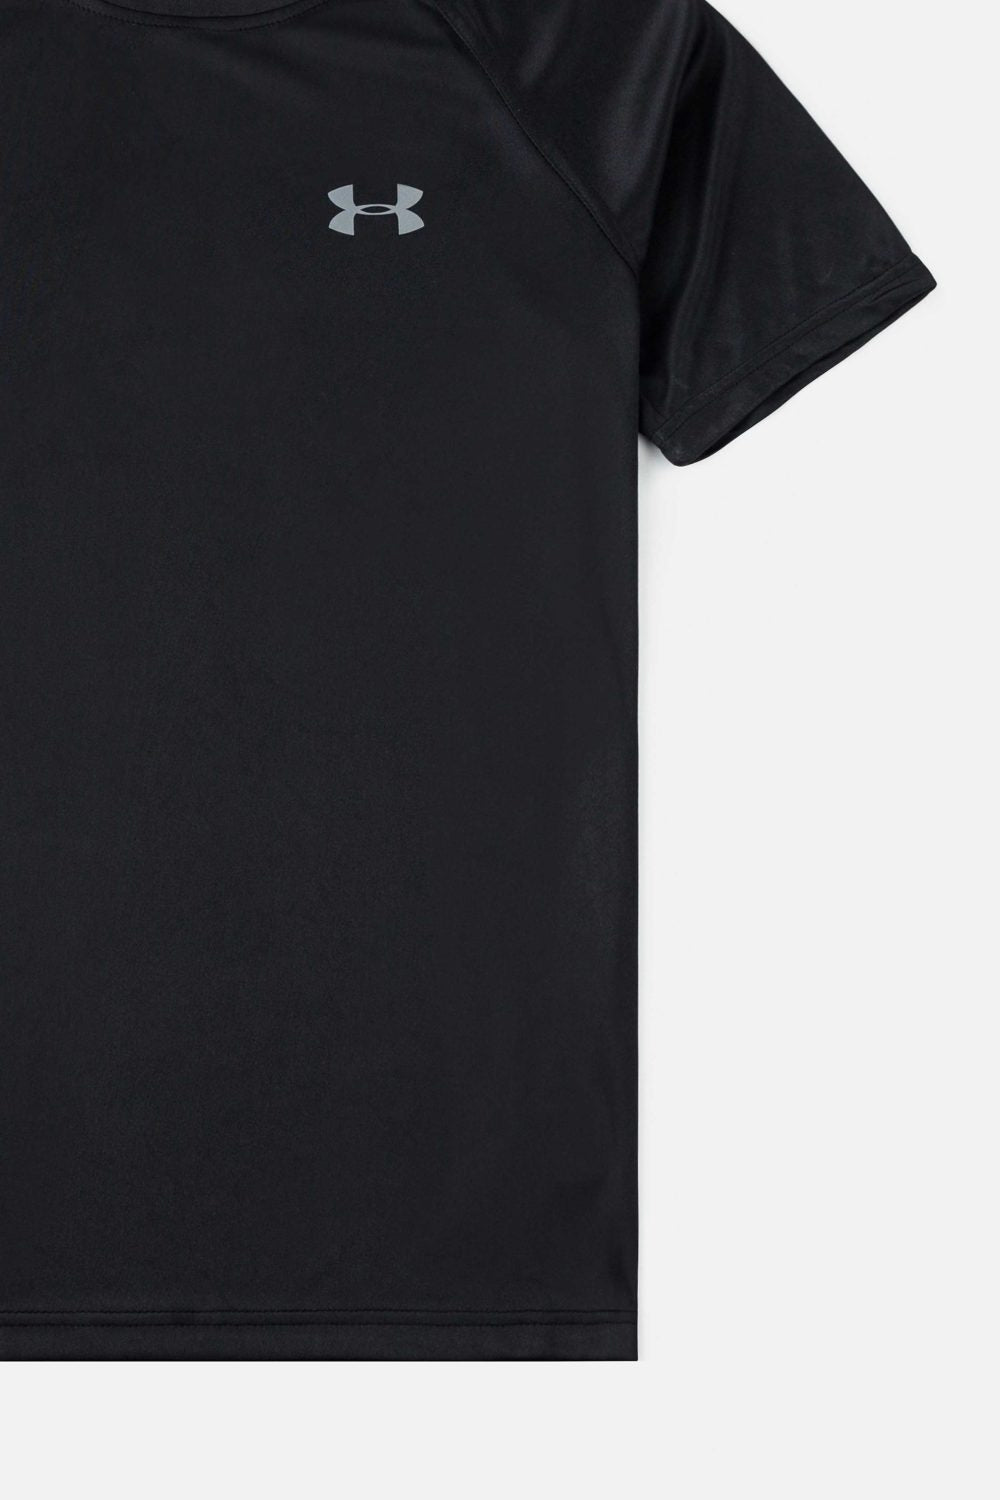 UA Imported Dri-FIT T Shirt – Black